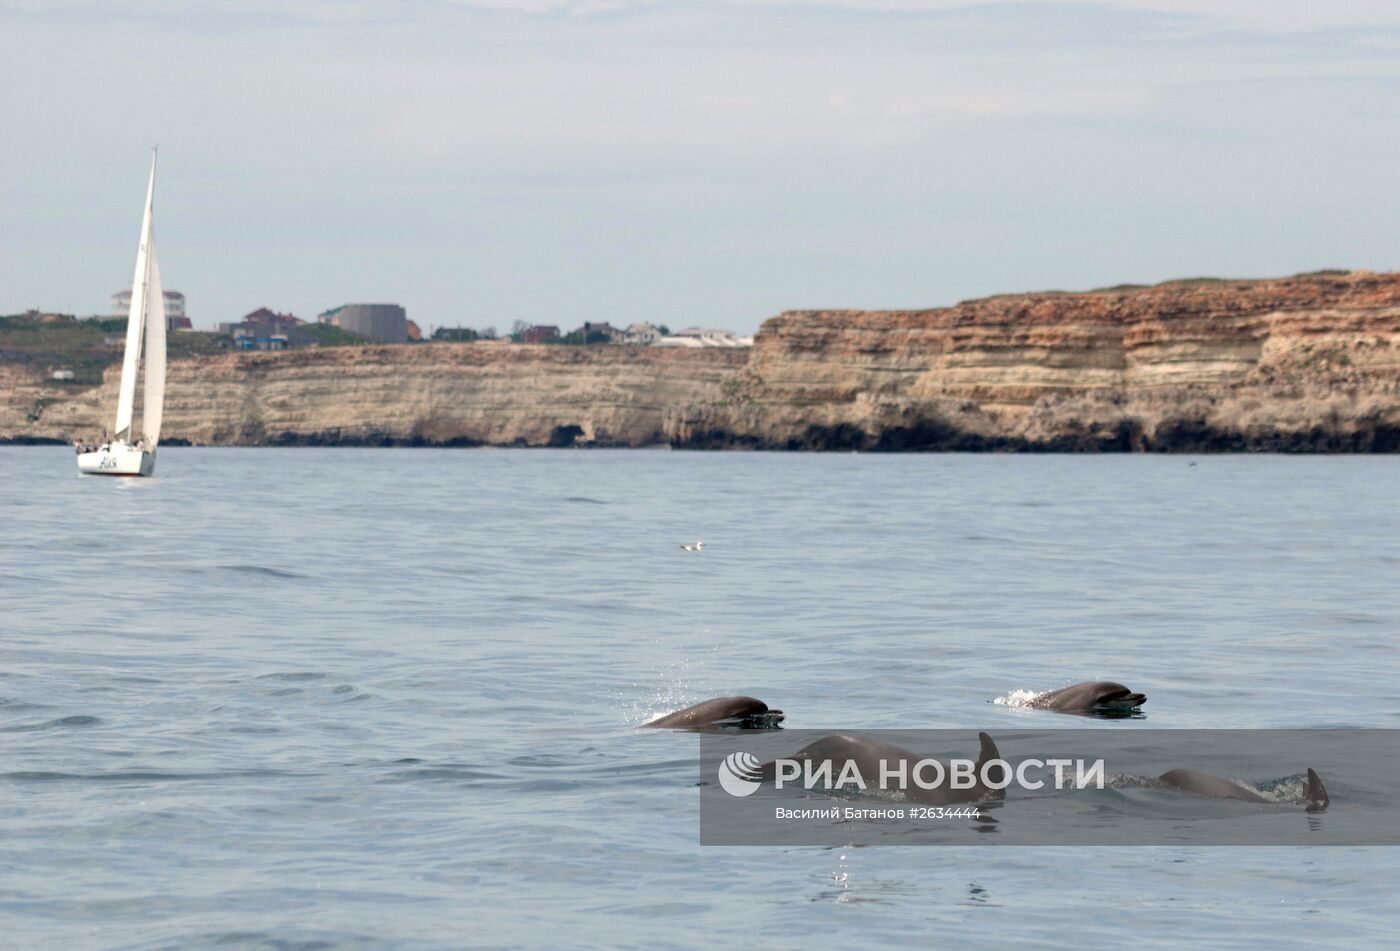 Парусная регата "Морское перо" в Севастополе